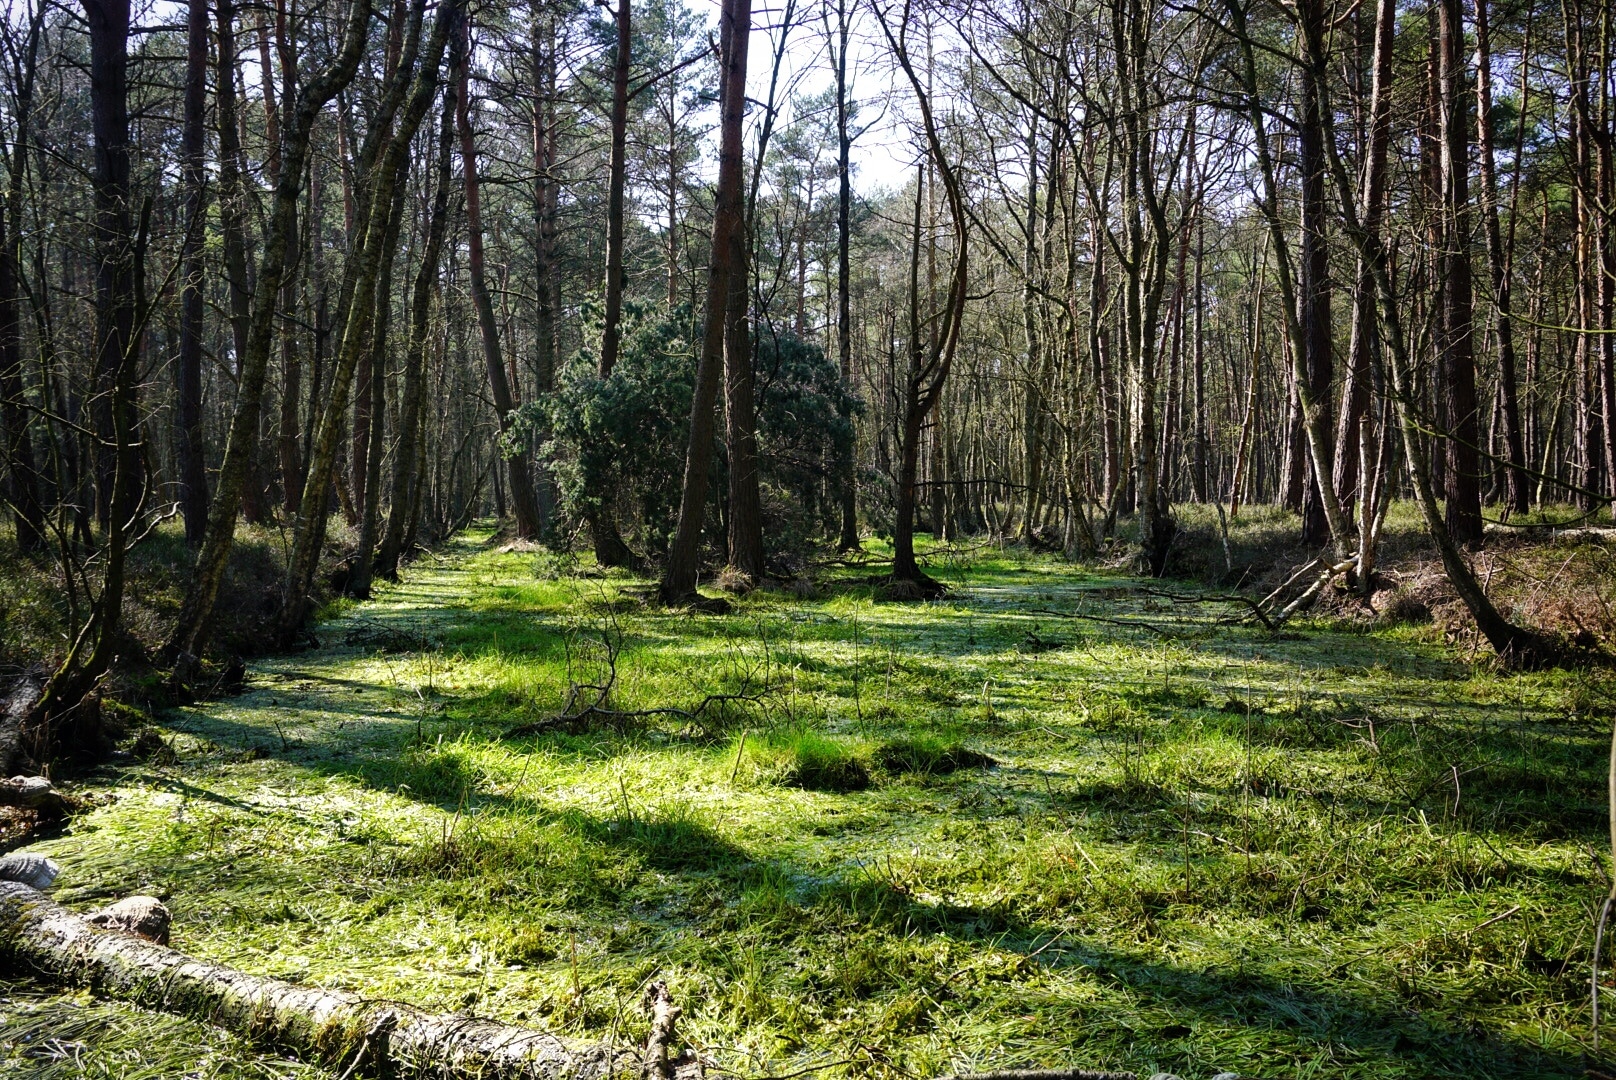 Oldhorster Moor